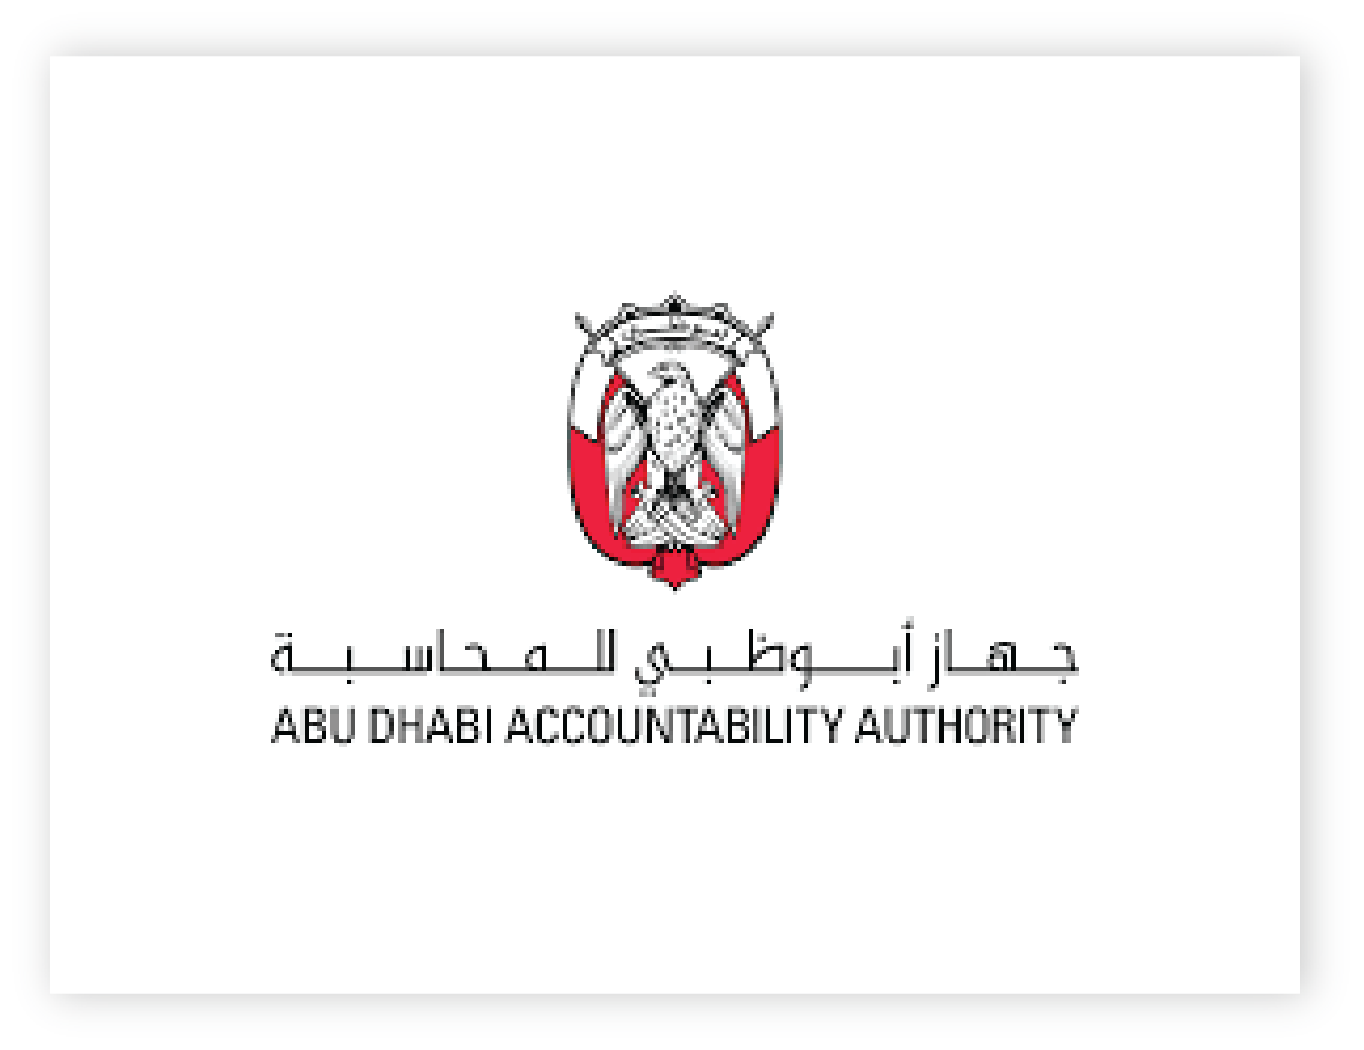 Abu Dhabi Accountability